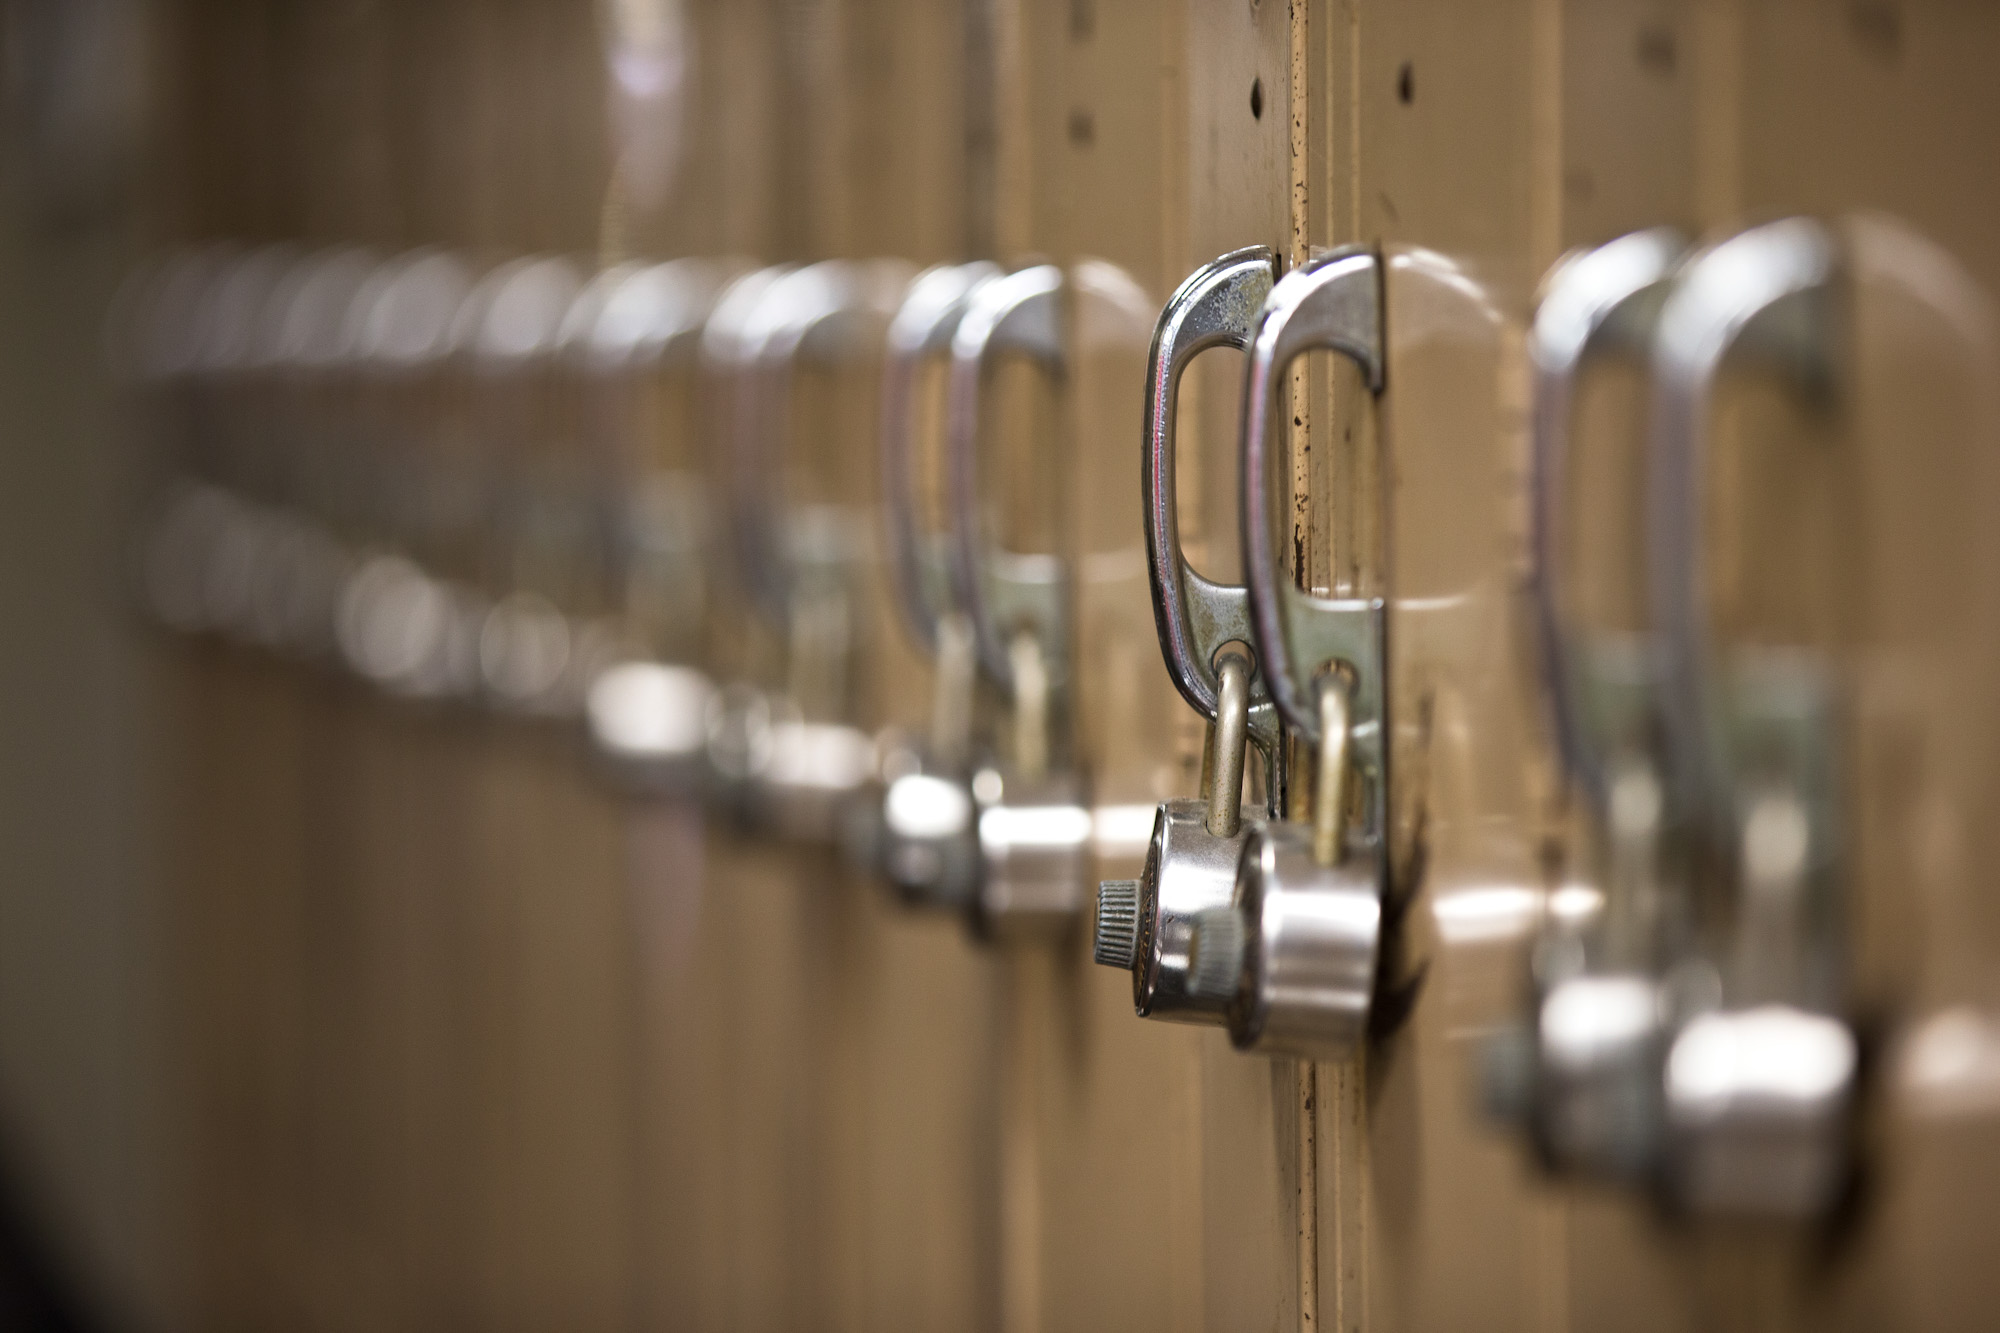 Lockers at a high school.